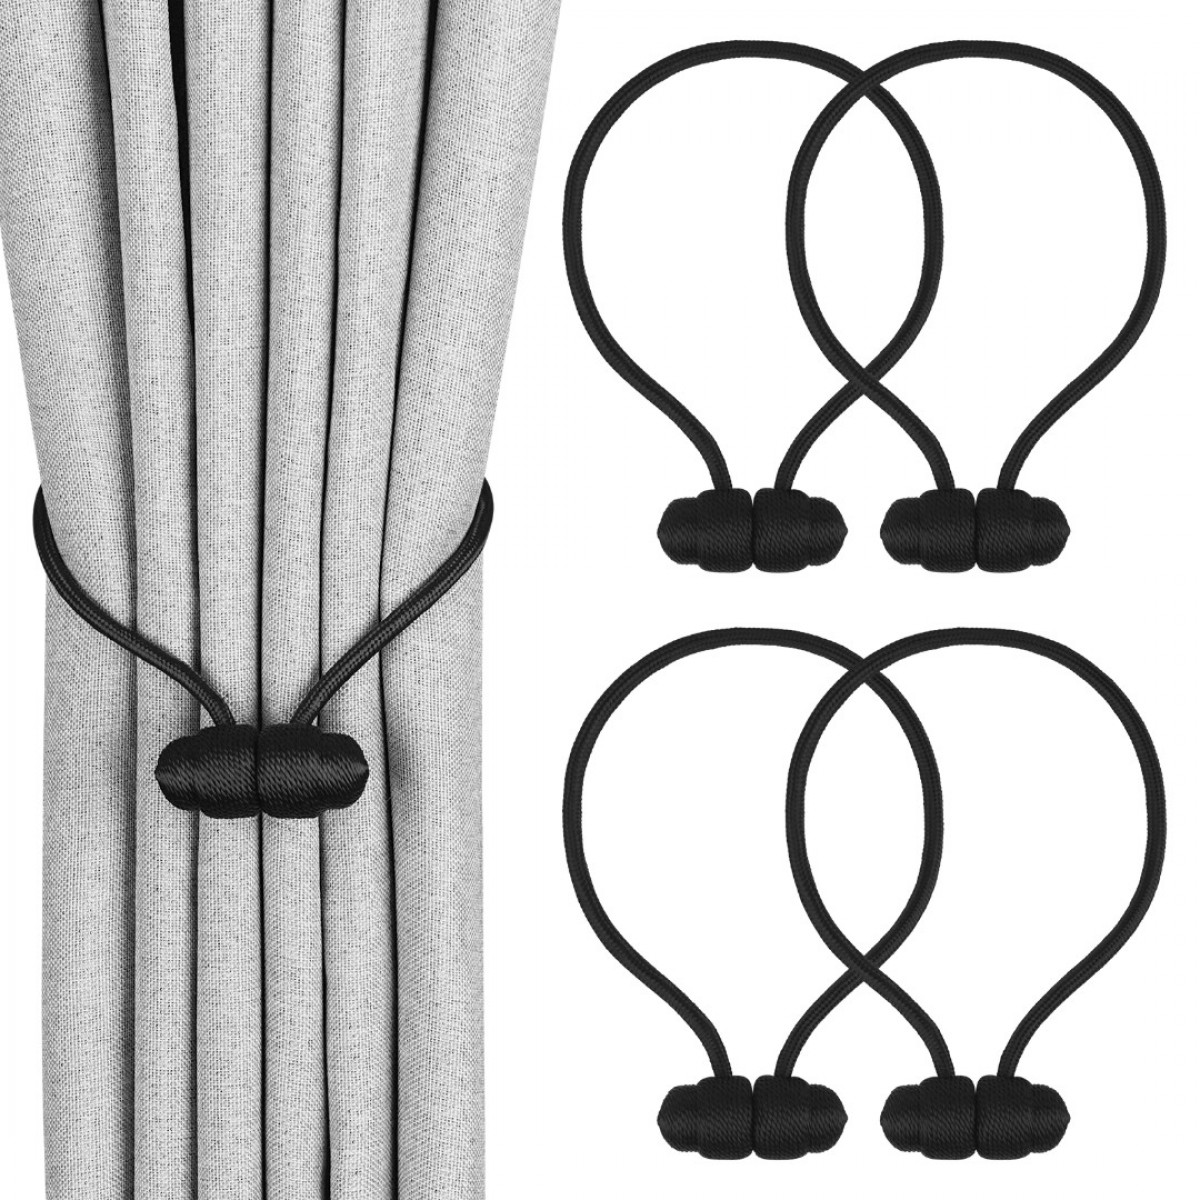 Ohtomber Black Magnetic Curtain Tiebacks - 4 Pack Curtain Tie Backs for Curtains, Strong Curtain Tie